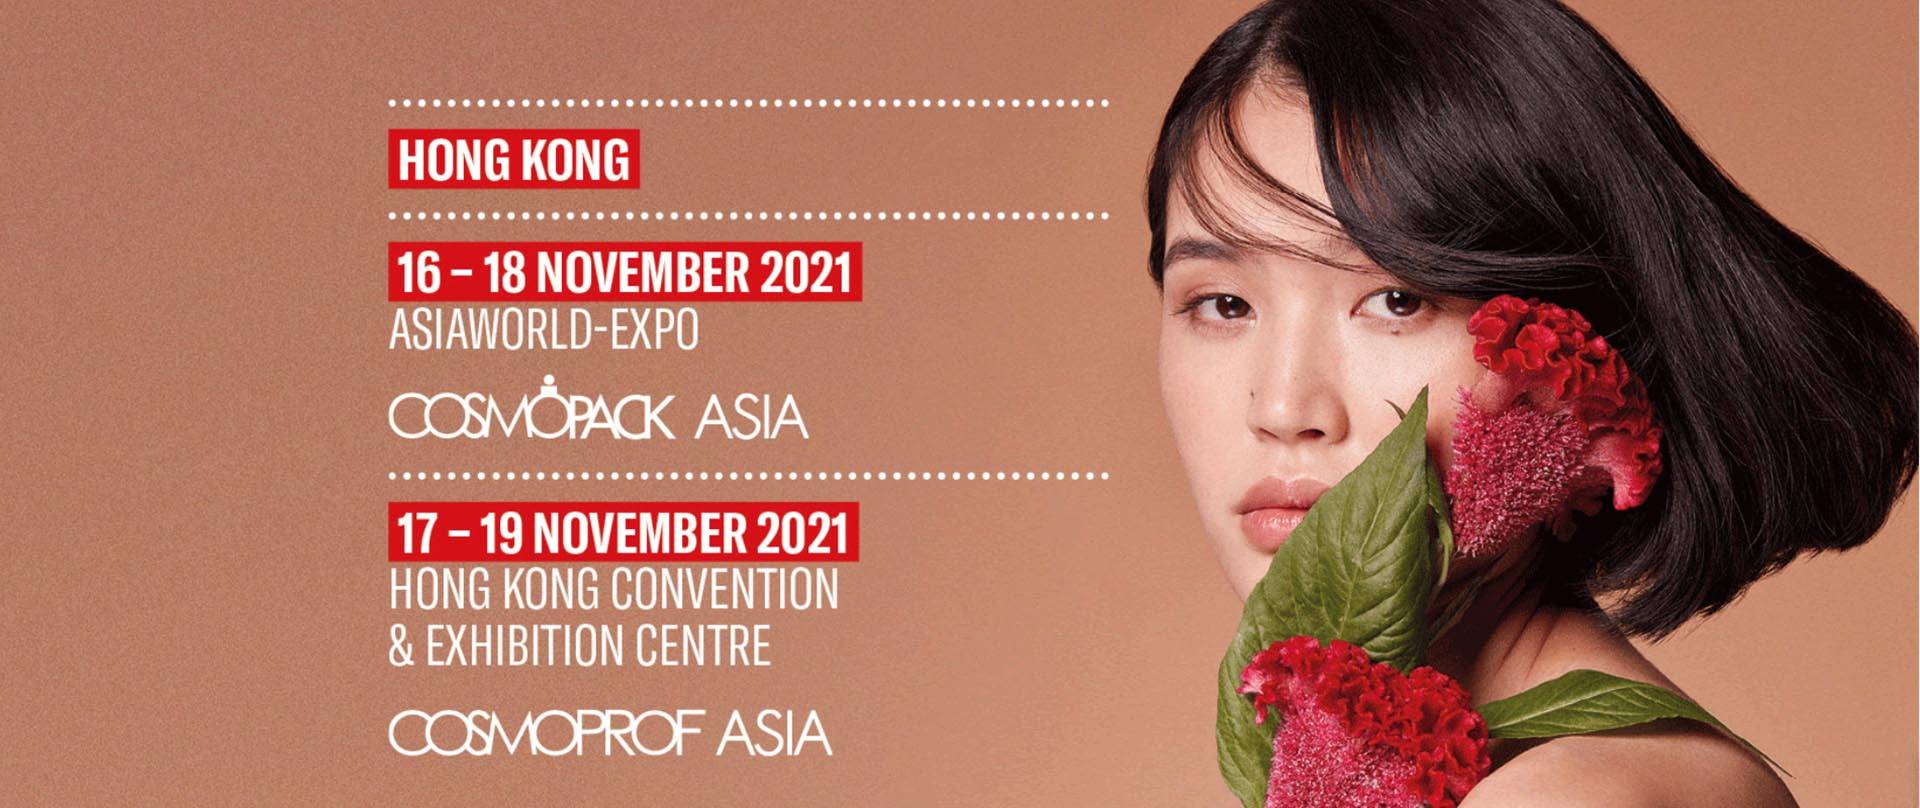 Cosmoprof-Asia v Hongkongu 2021